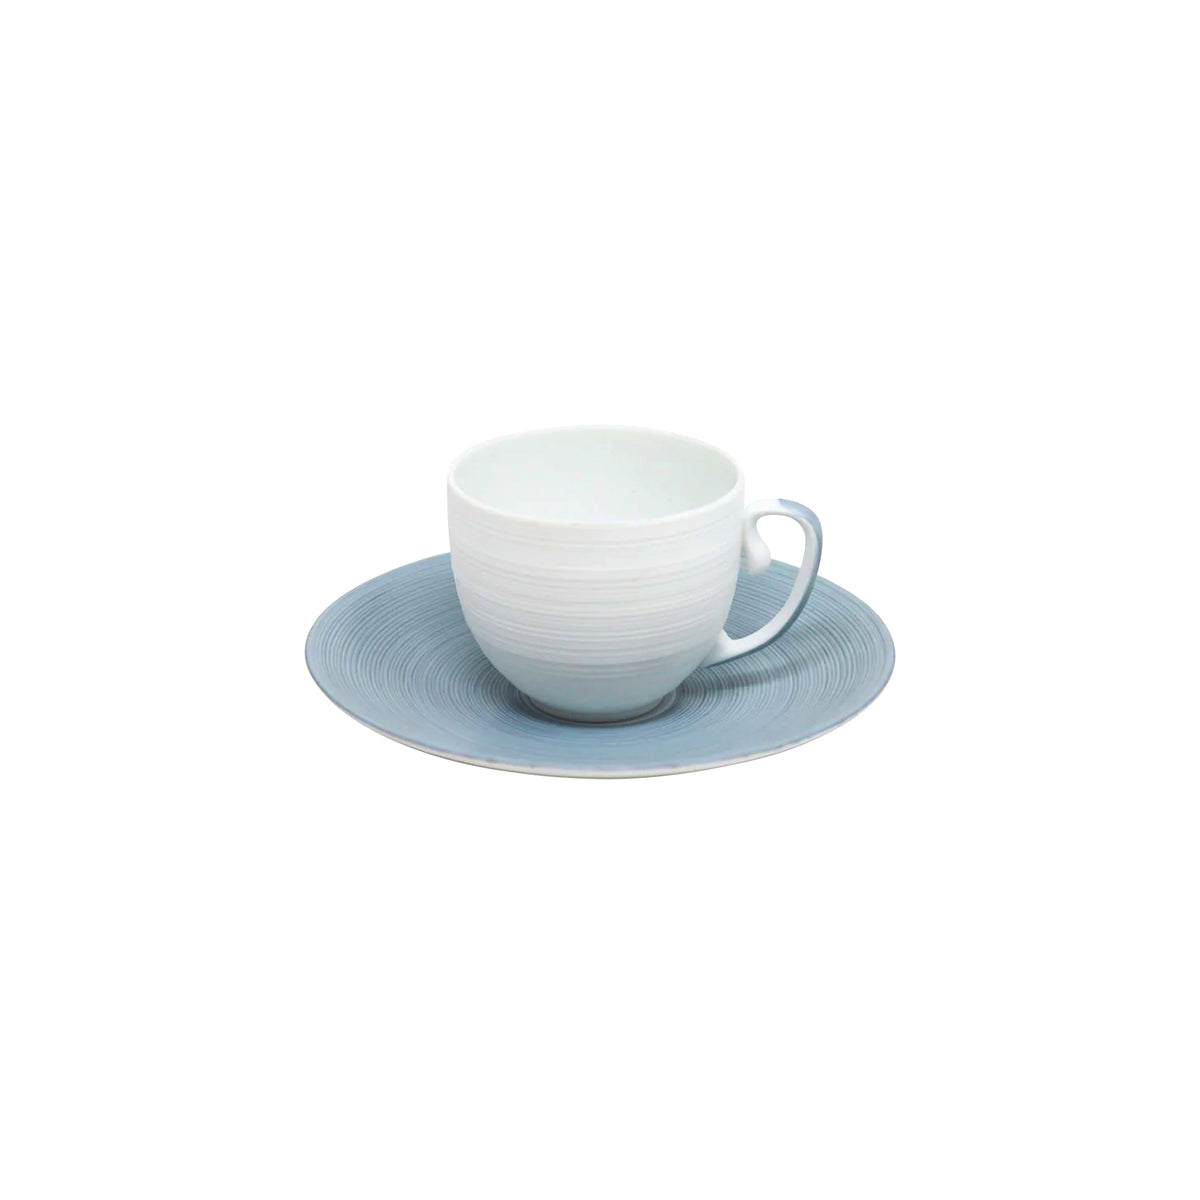 HEMISPHERE Storm Blue - Coffee set (cup & saucer)